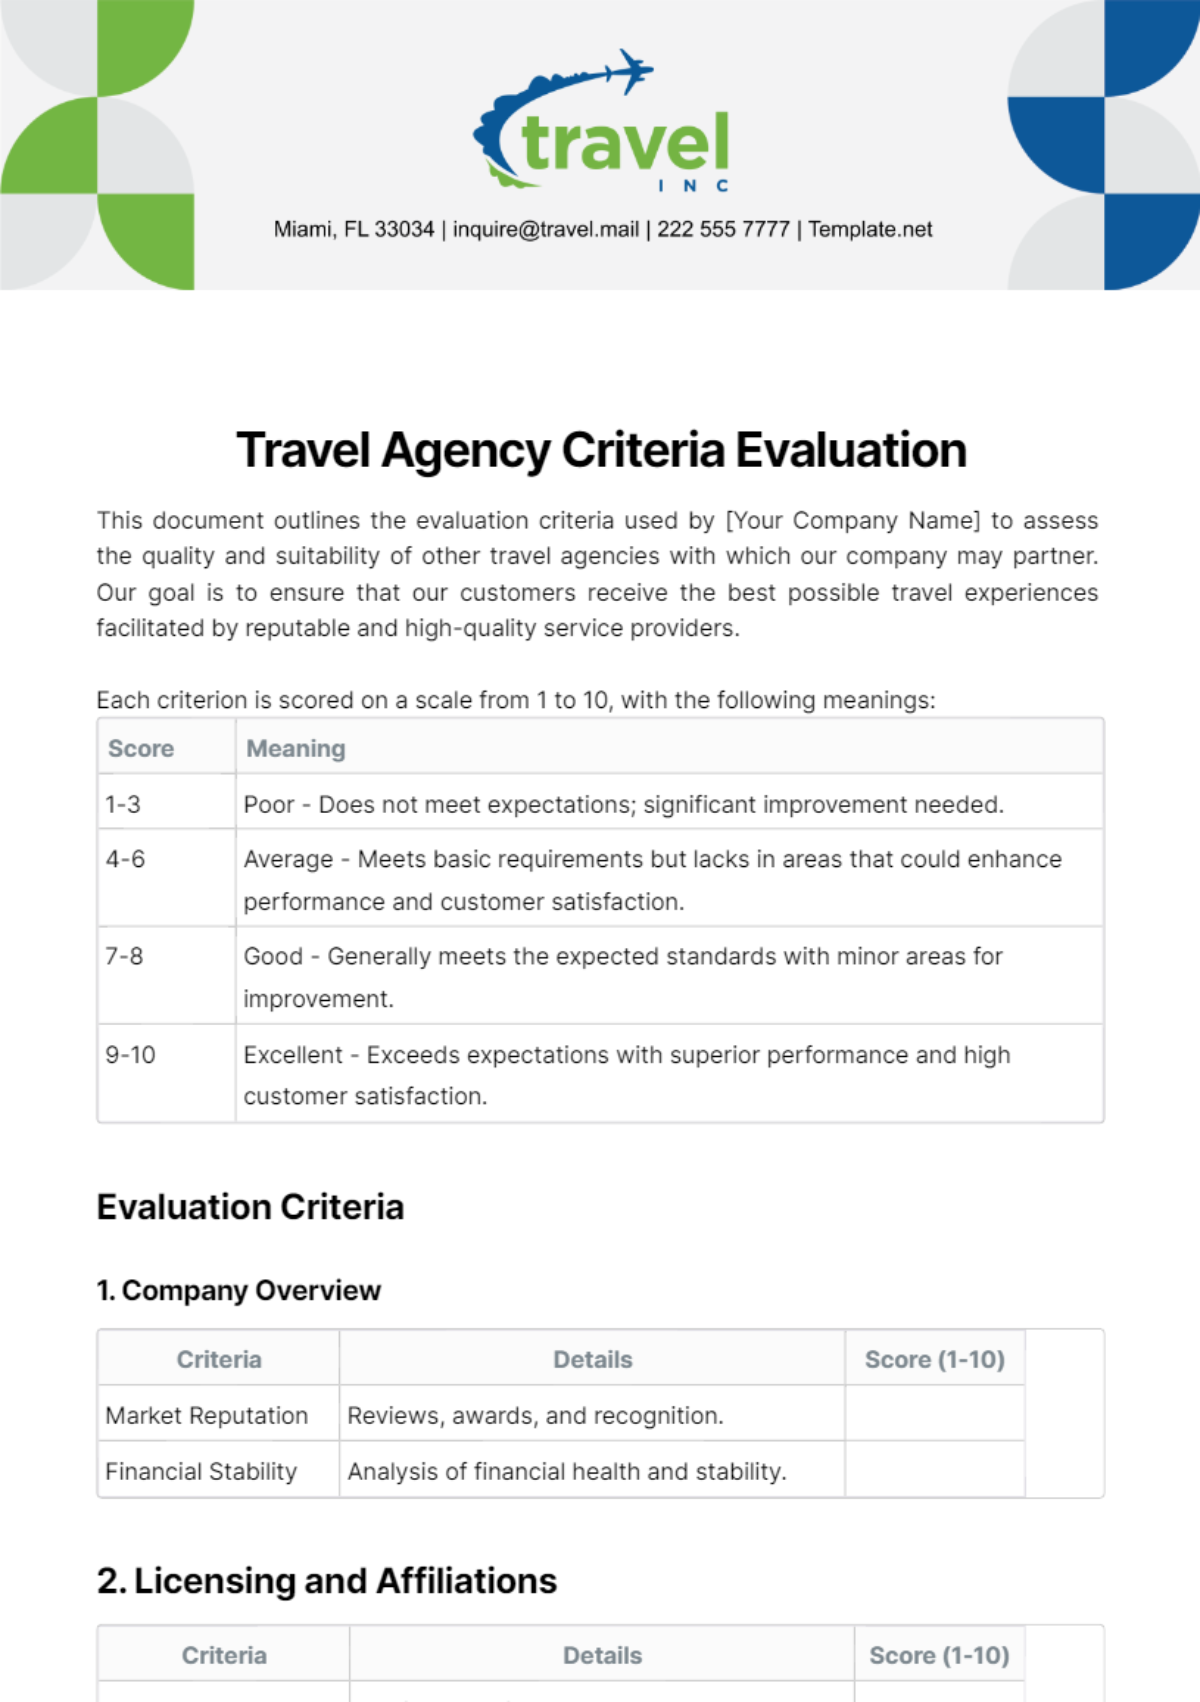 Travel Agency Criteria Evaluation Template